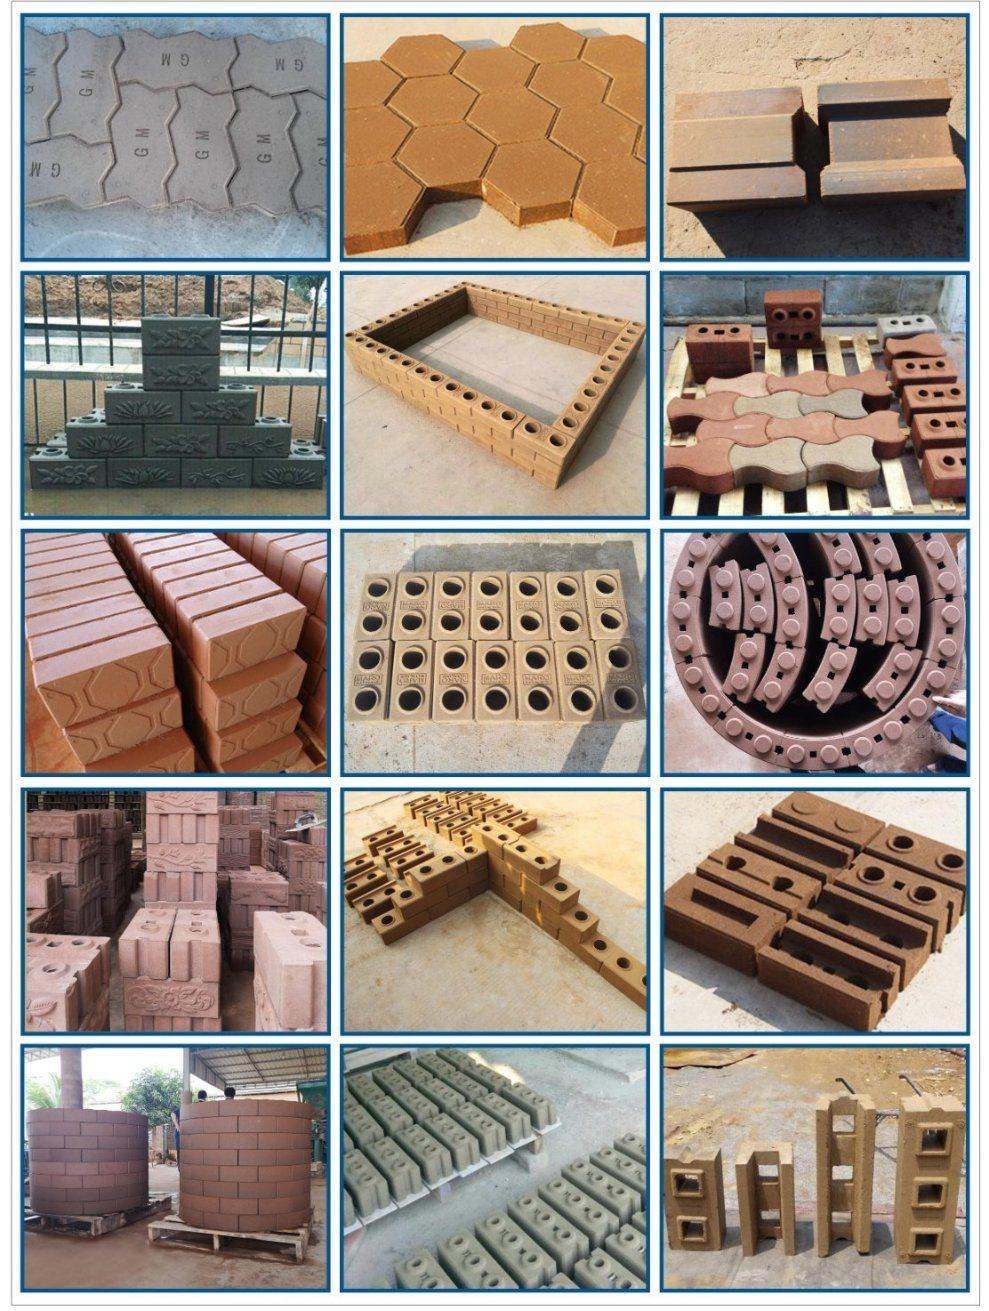 Desile Interlocking Concrete Block Machine Hydraulic Press Block Machine From China